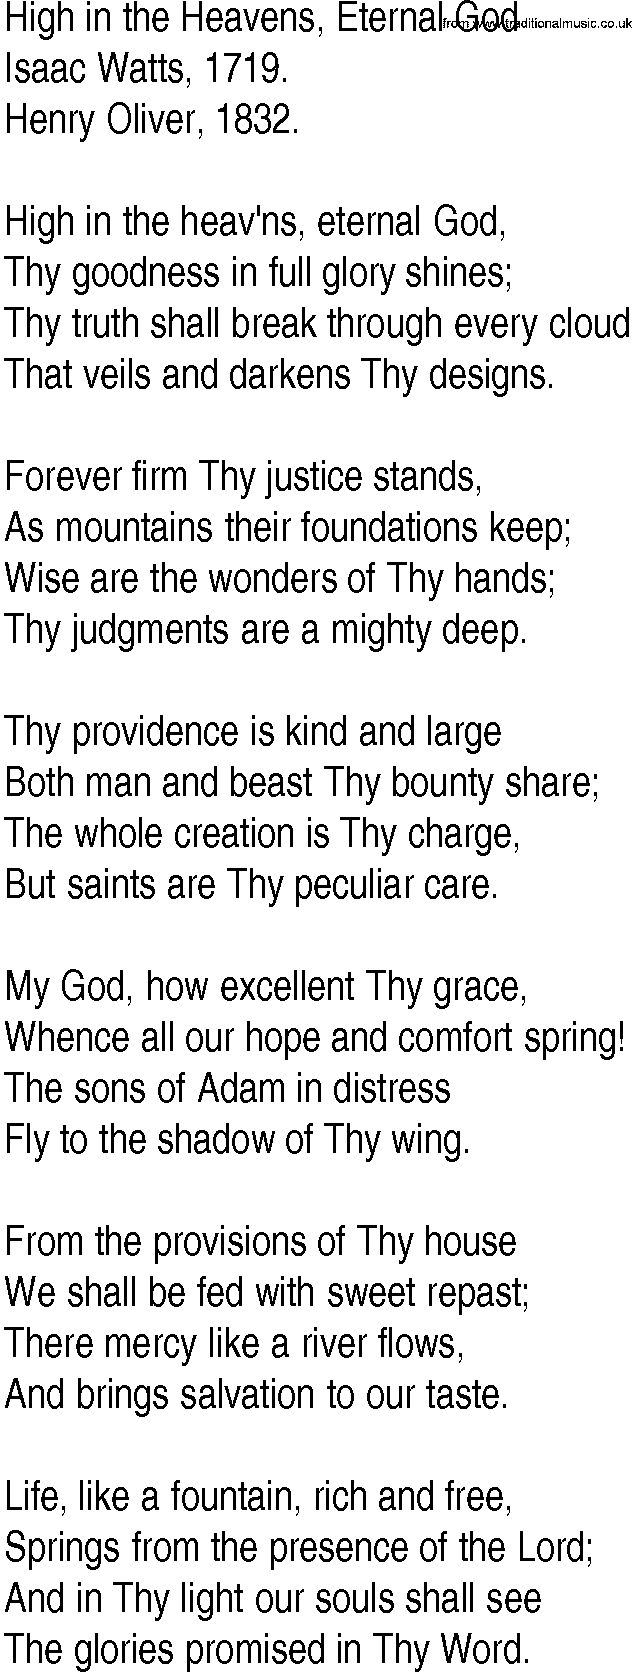 Hymn and Gospel Song: High in the Heavens, Eternal God by Isaac Watts lyrics